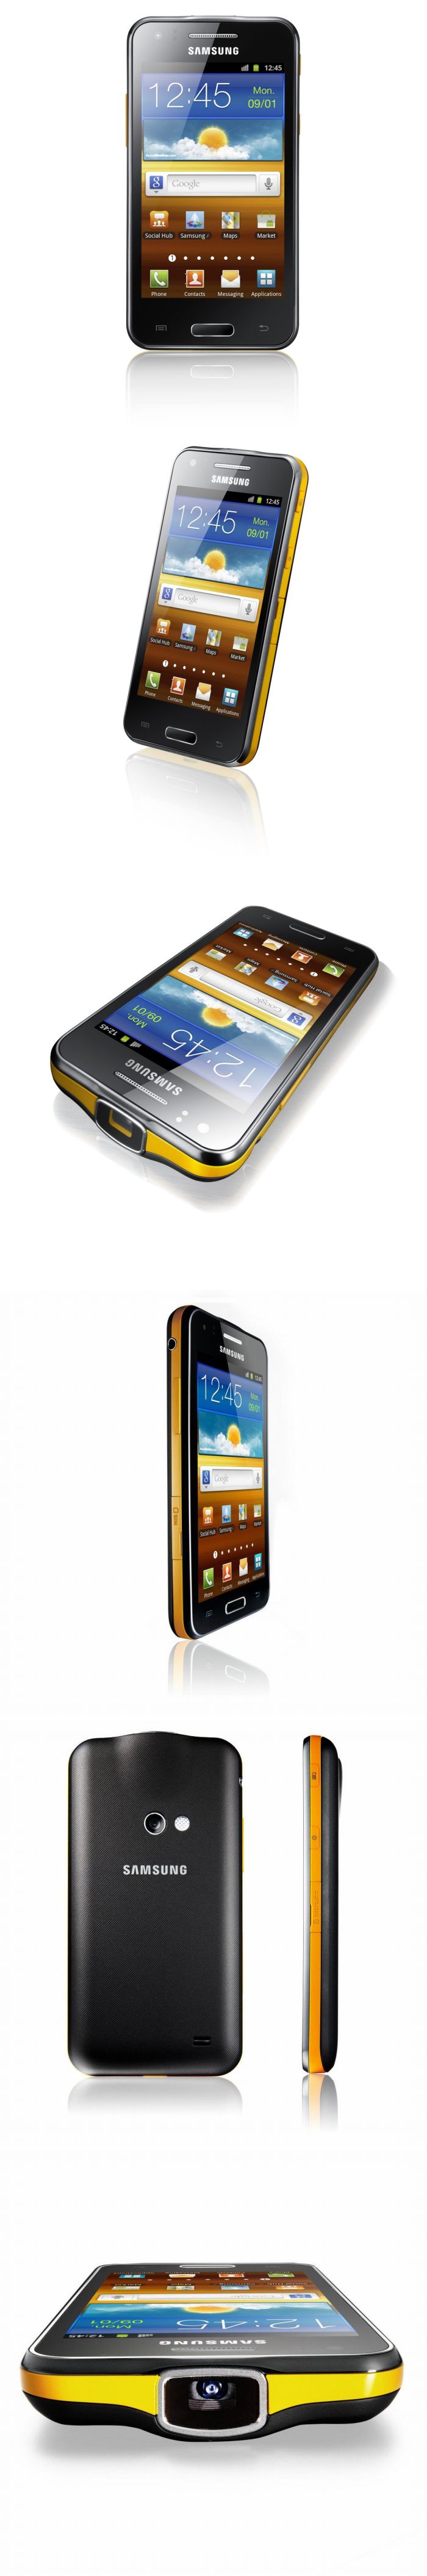 Samsung Galaxy Beam: mobil projektorral